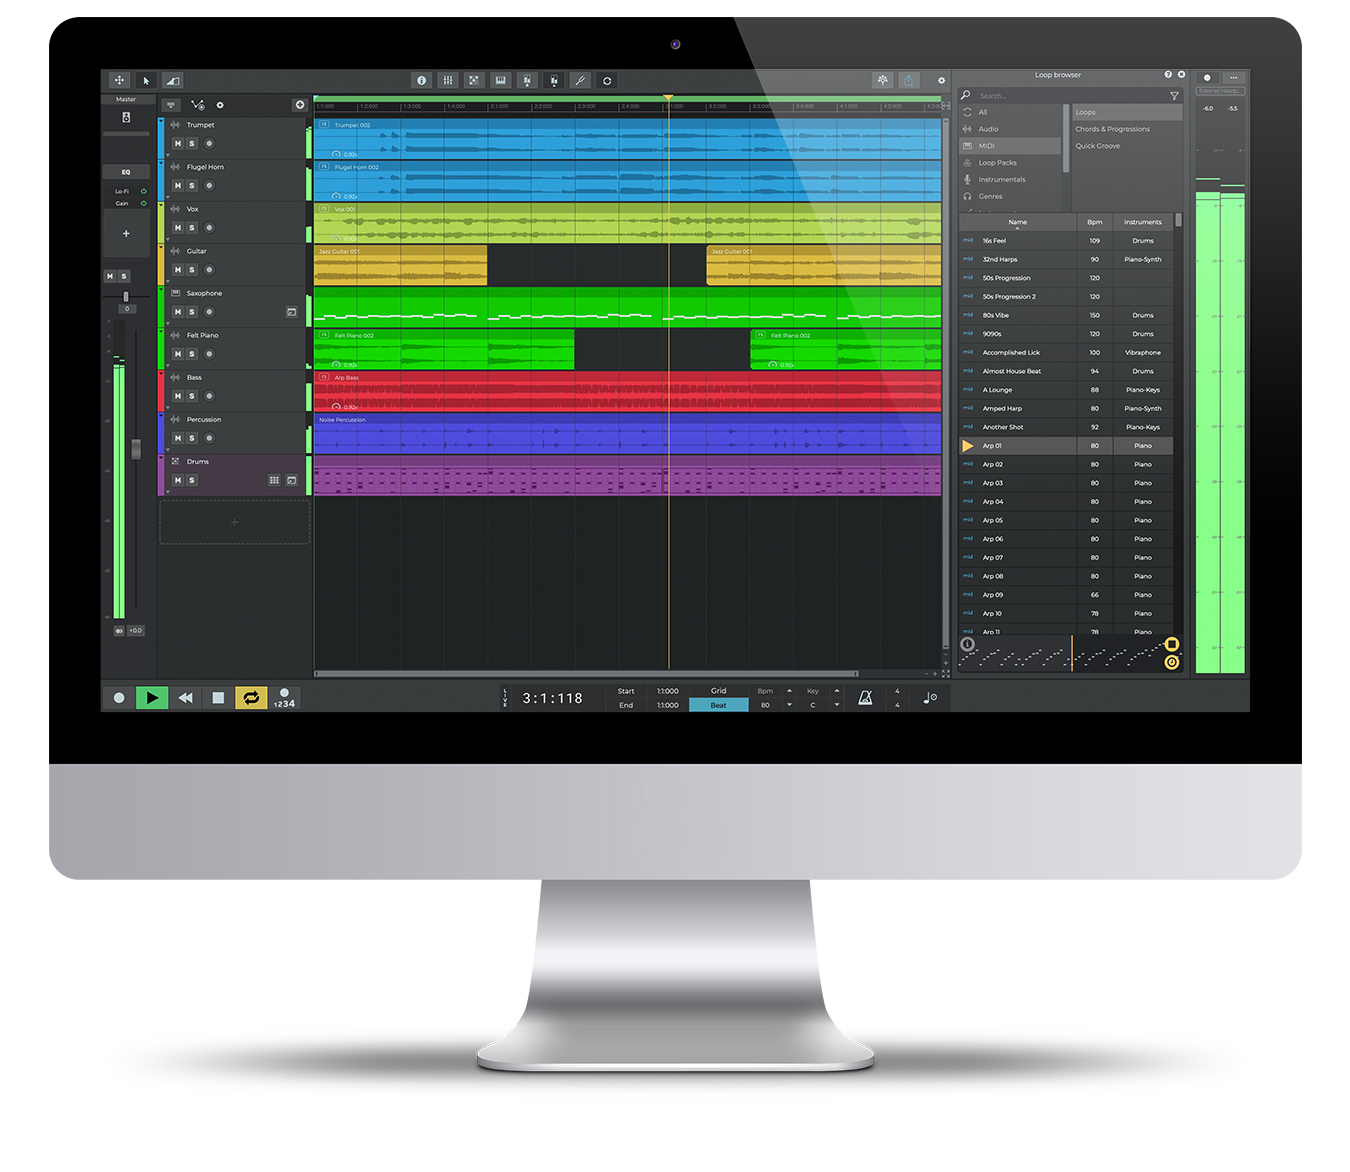 n-Track Studio 9.1.8.6971 download the last version for apple